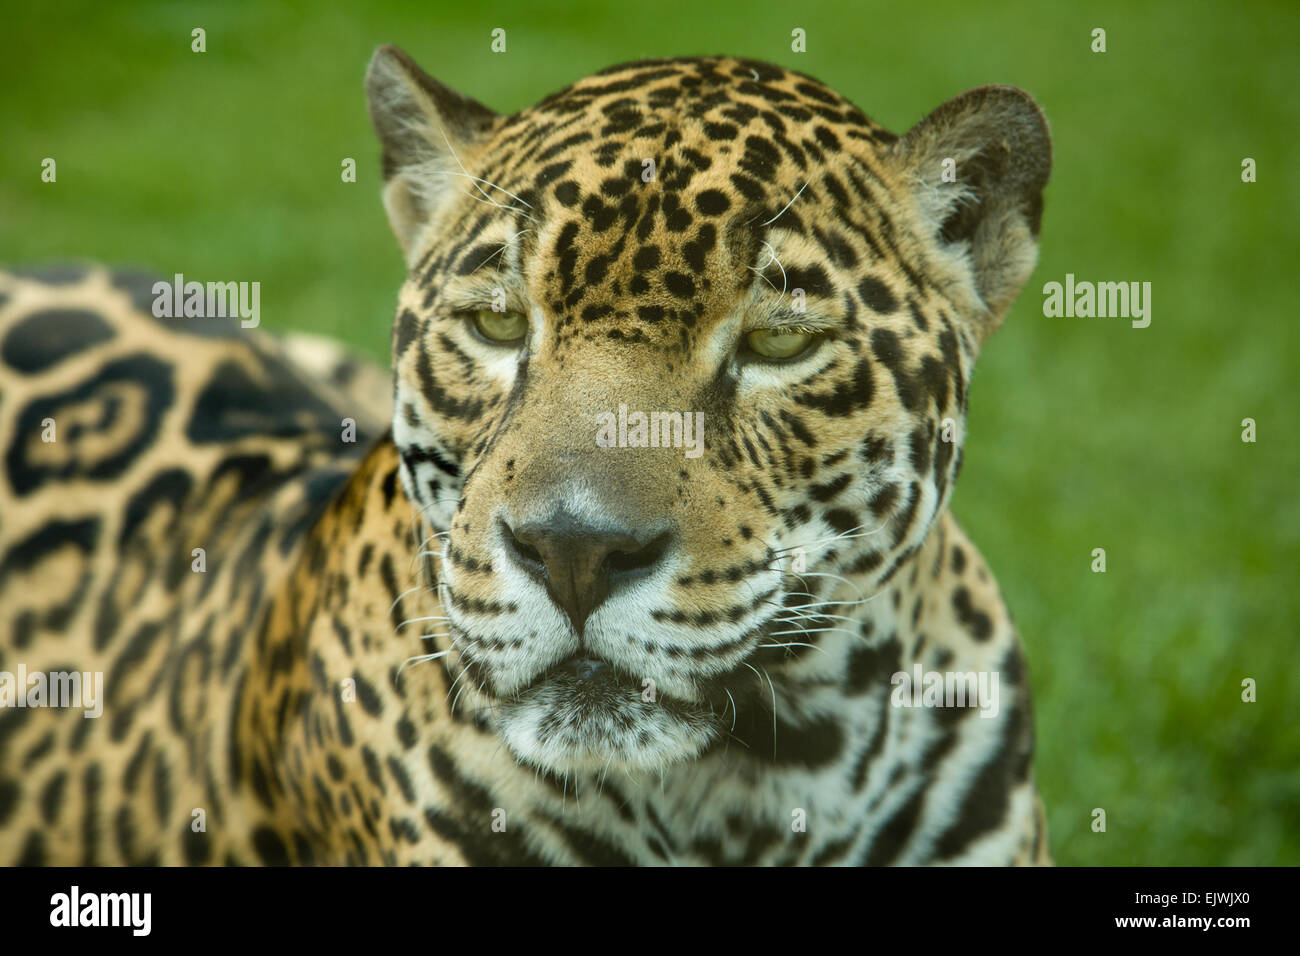 Close up of magnificent big cat jaguar or panthera onca eyes staring at camera Stock Photo